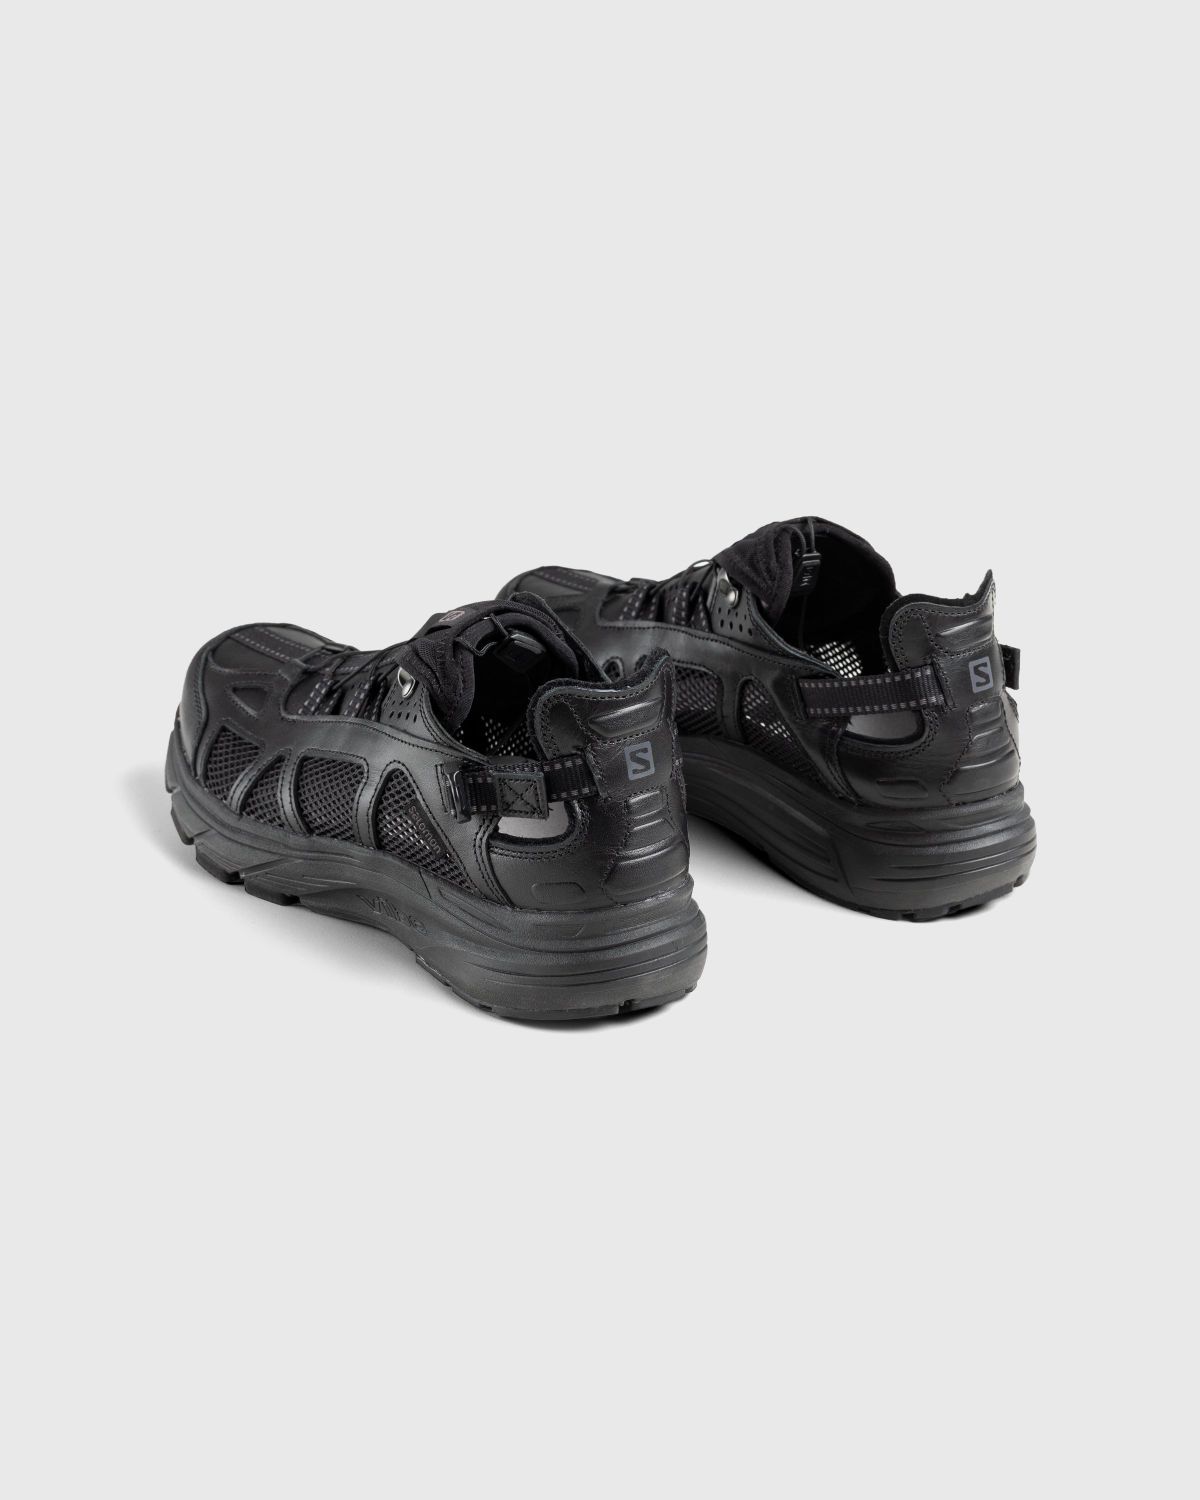 Salomon – Techsonic Leather Advanced Black/Black/Magnet - Low Top Sneakers - Black - Image 3